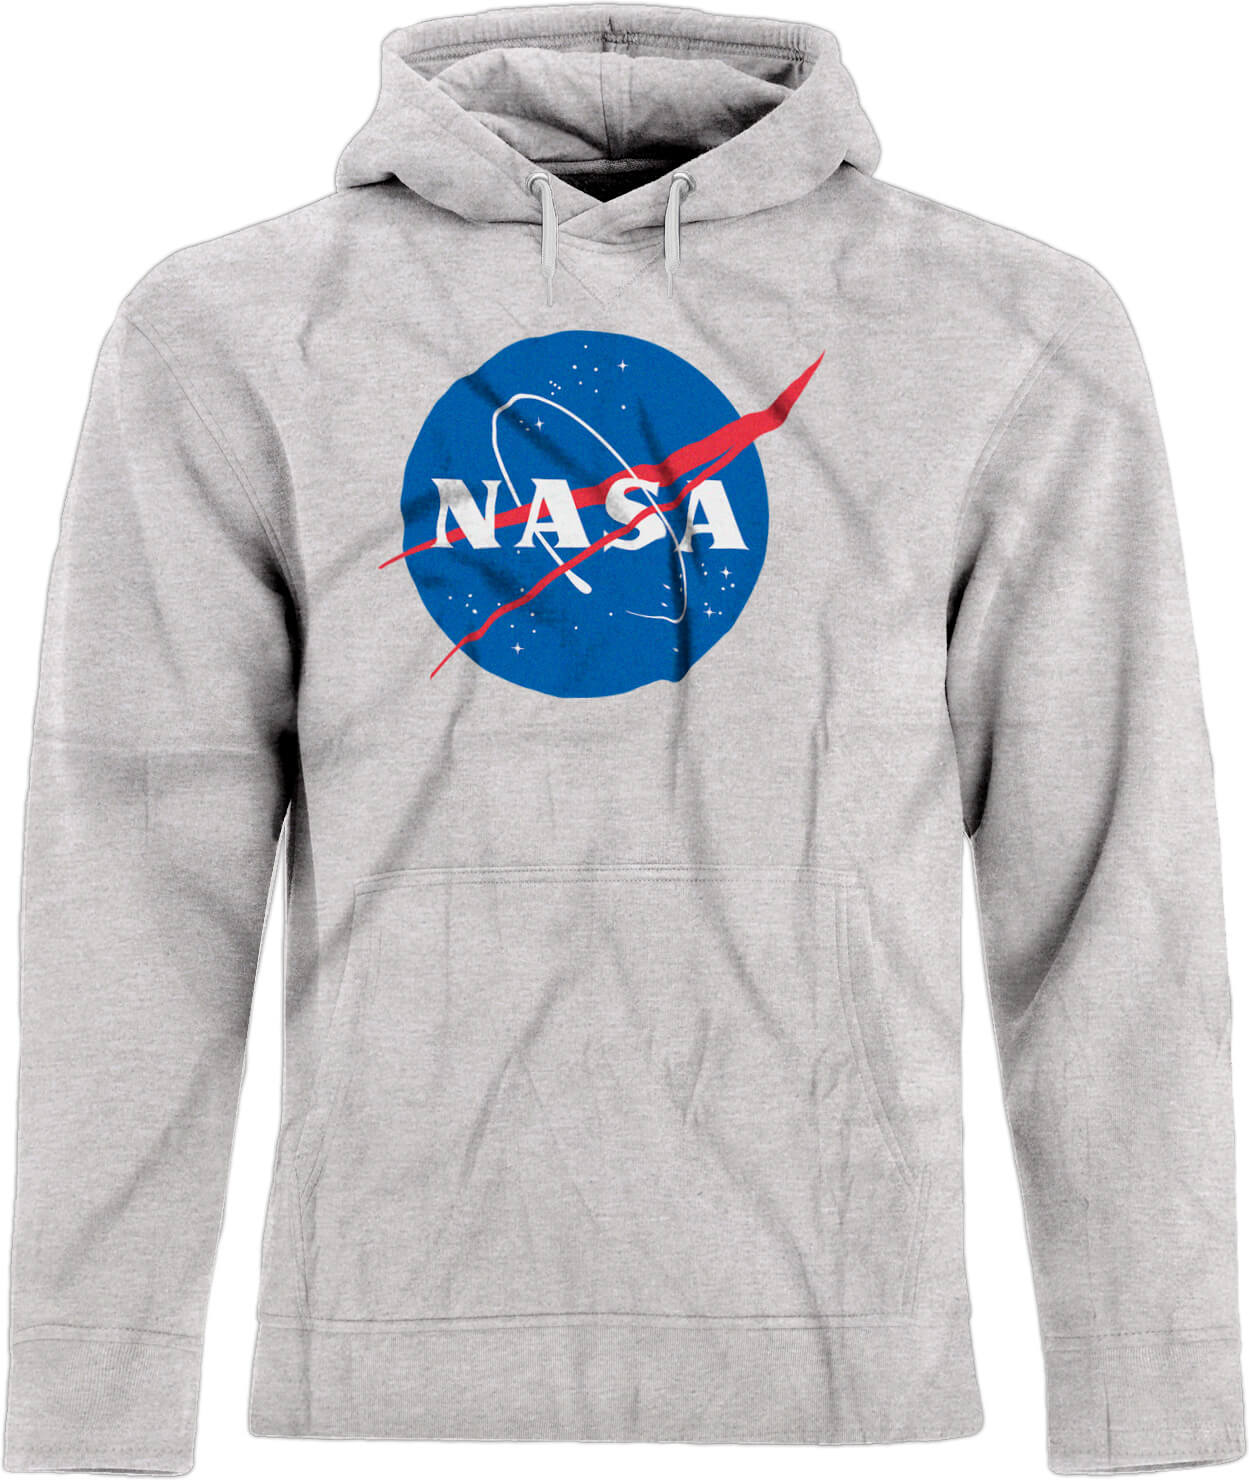 BSW Youth Boys NASA Space Astronomy Zip Hoodie Online Exclusive Online ...